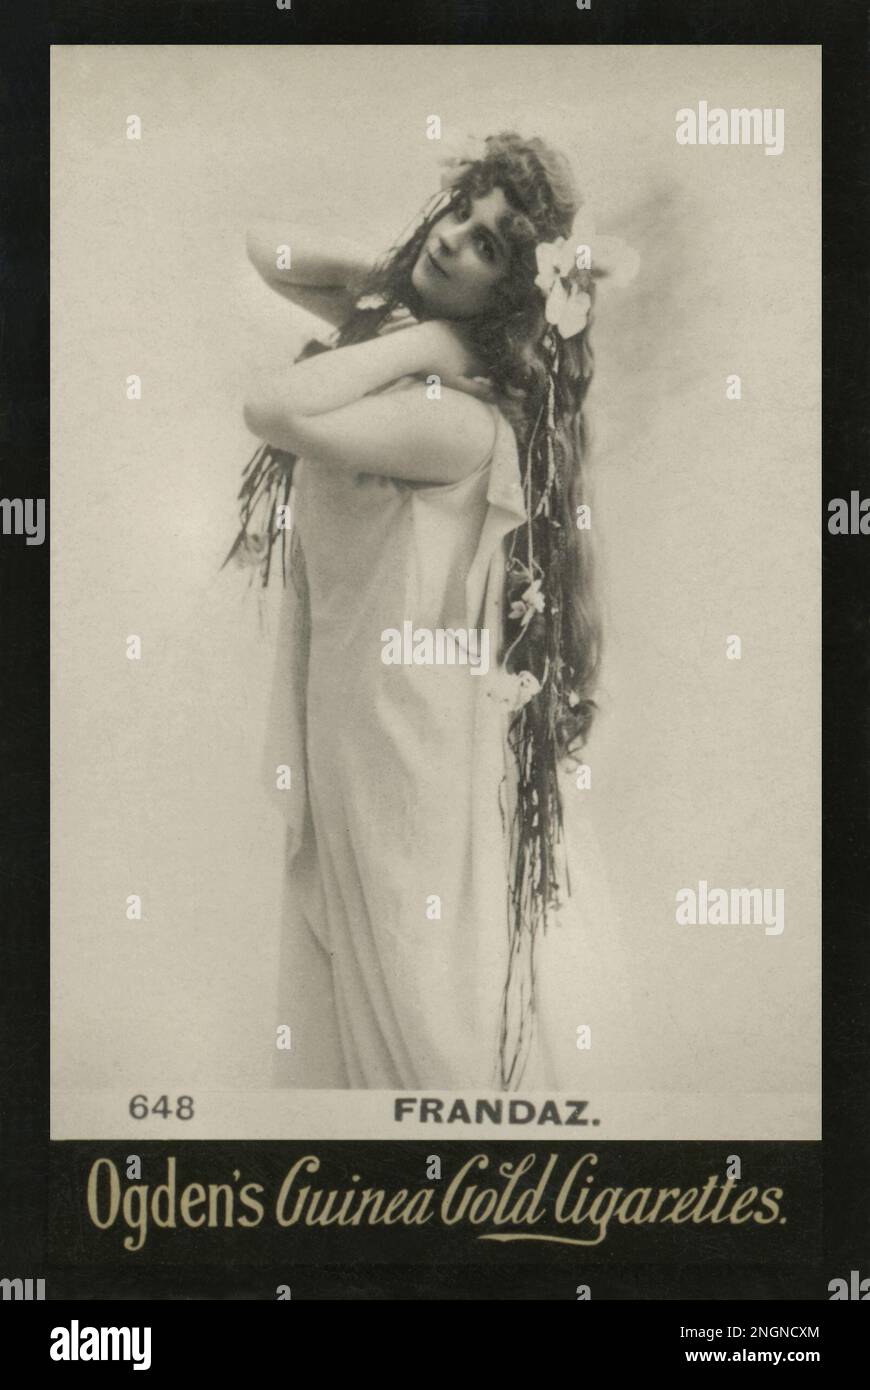 Frandaz - photo by Reutlinger Studio (Paris) - restored from original Ogden's Guinea Gold cigarette card by Montana Photographer Stock Photo